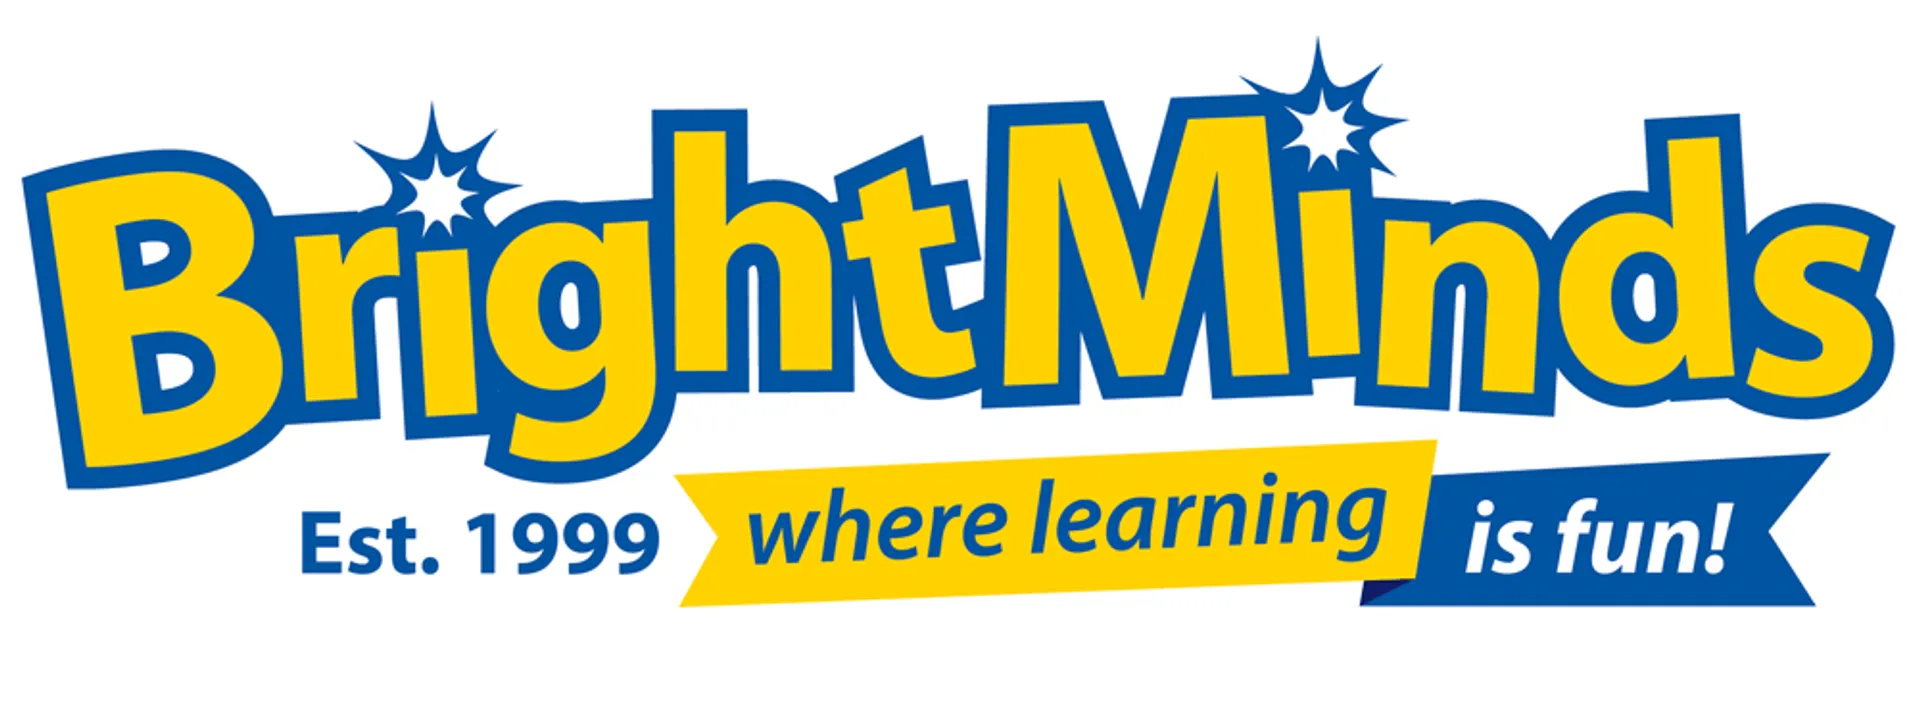 BRIGHT MINDS logo